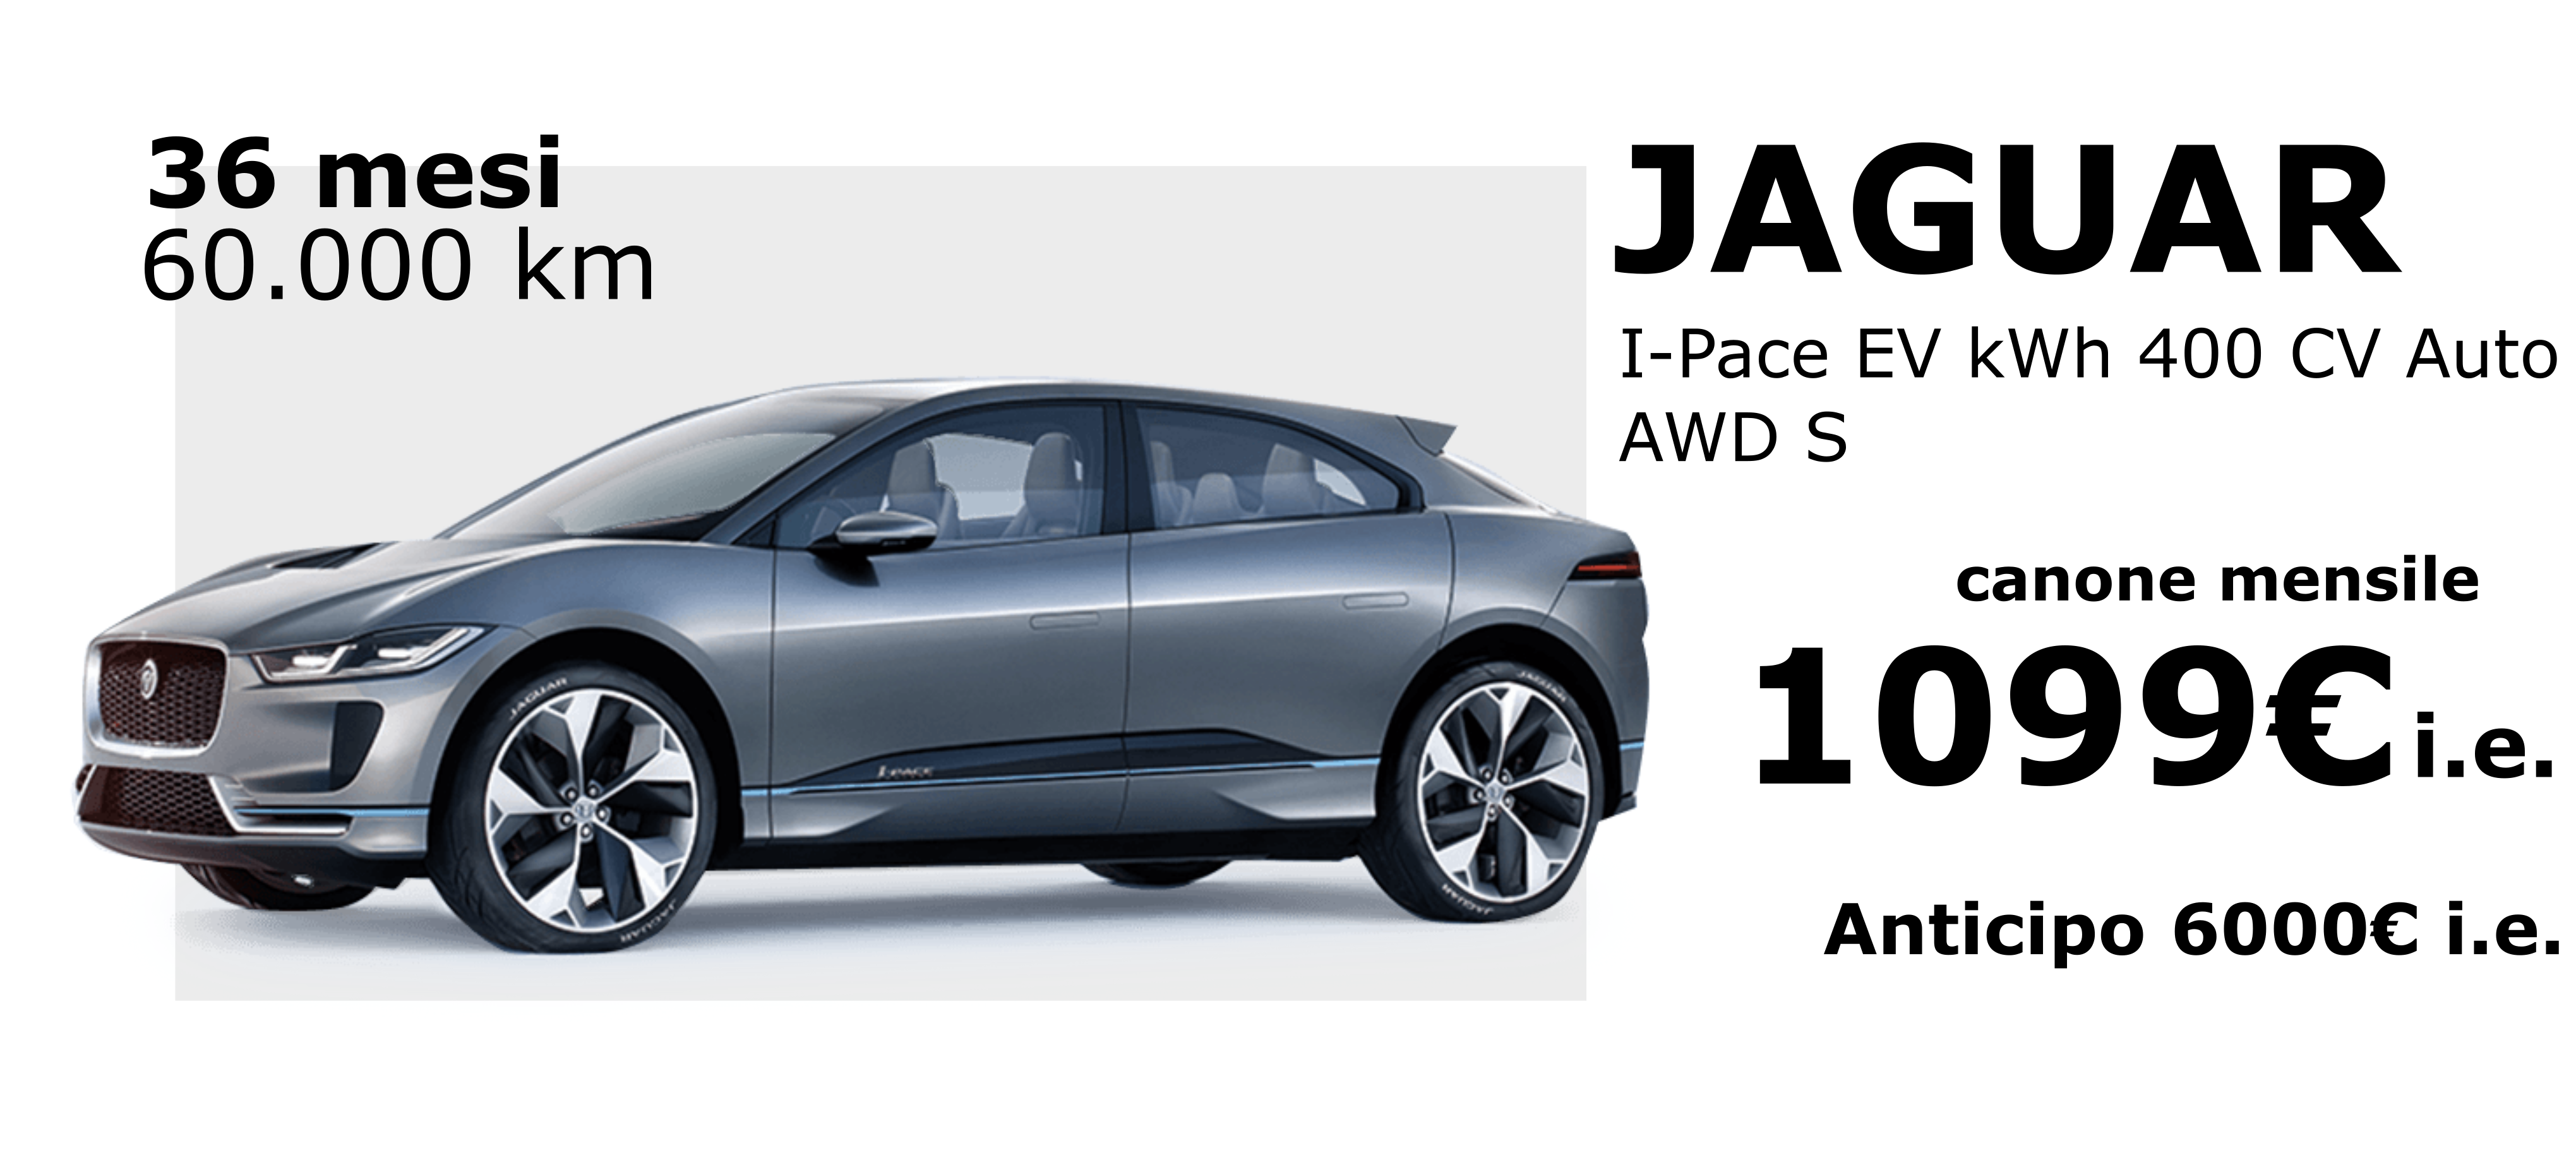 Jaguar I-Pace auto elettrica SIFÀ NLT